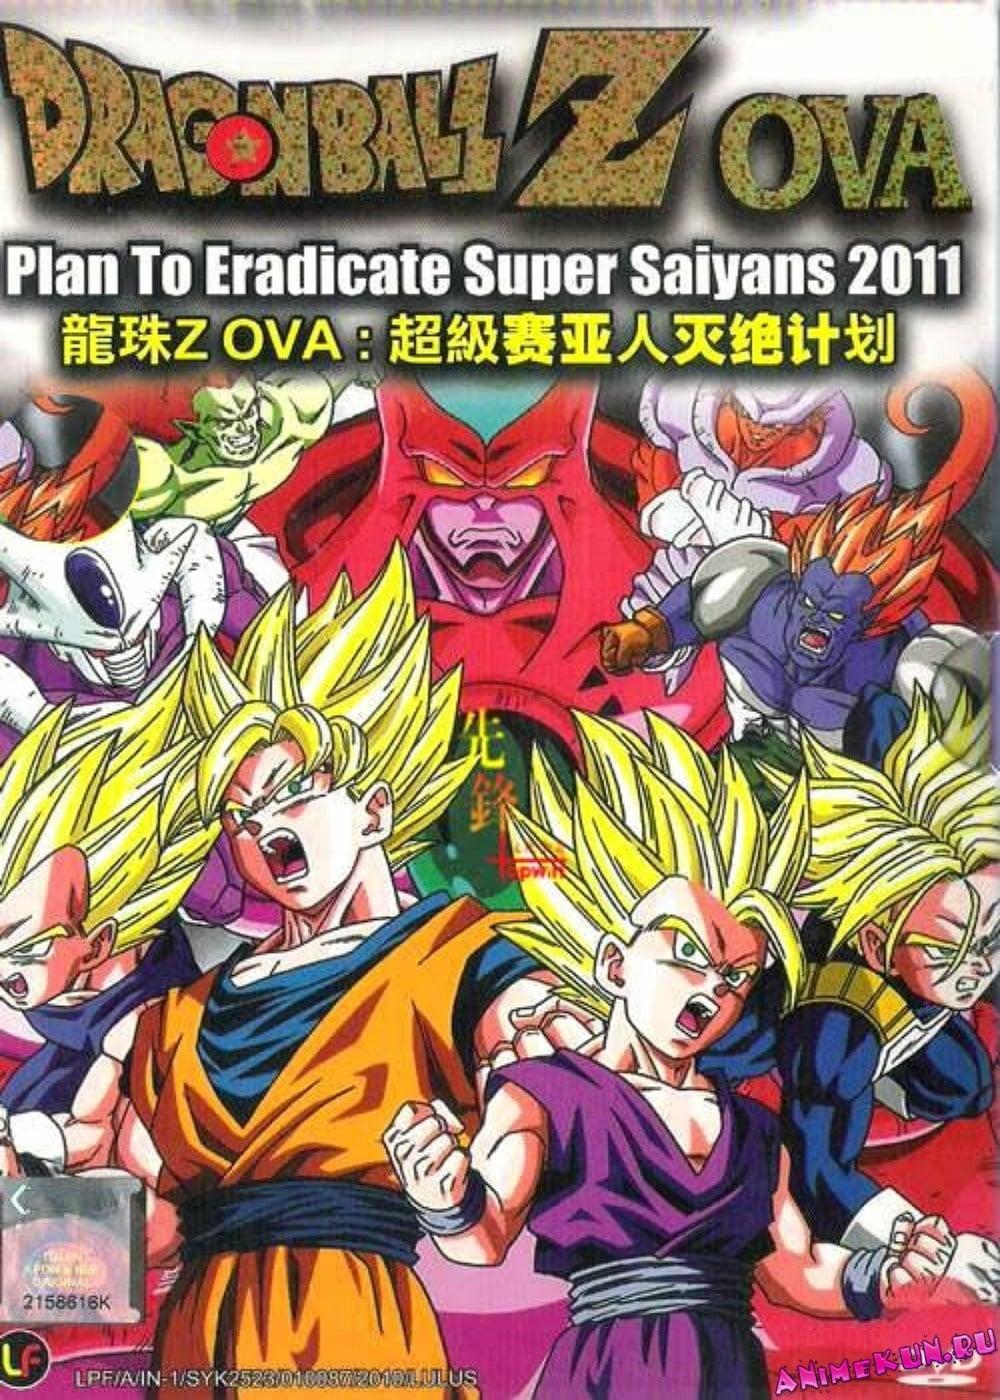 Dragon Ball Z: Plan to Eradicate the Super Saiyans poster